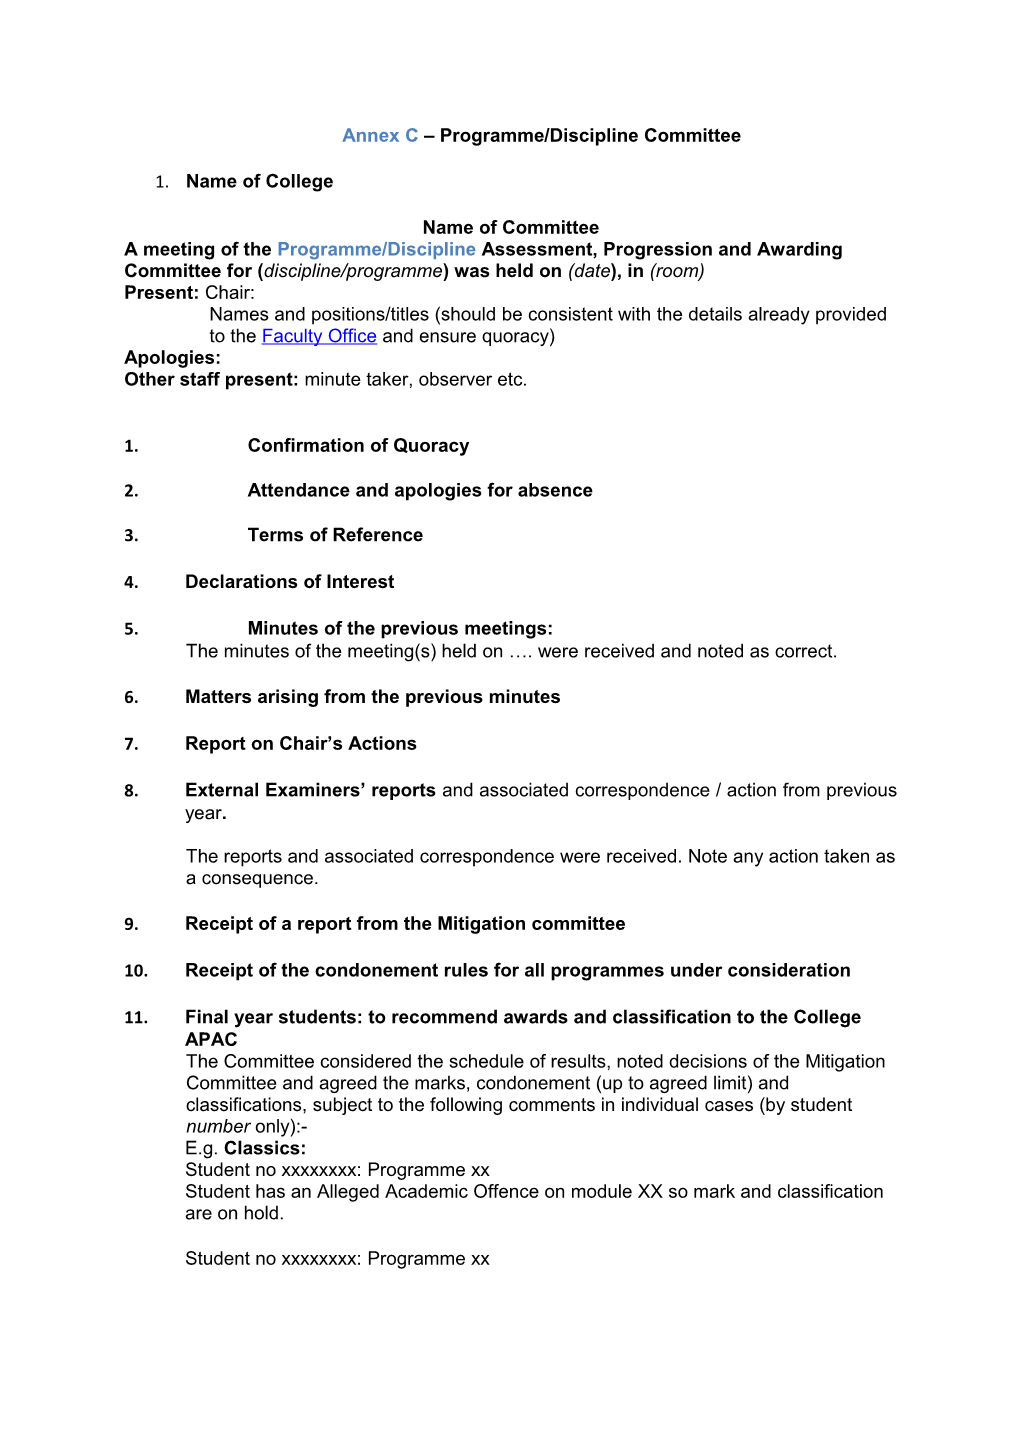 Annex C Programme/Discipline Committee